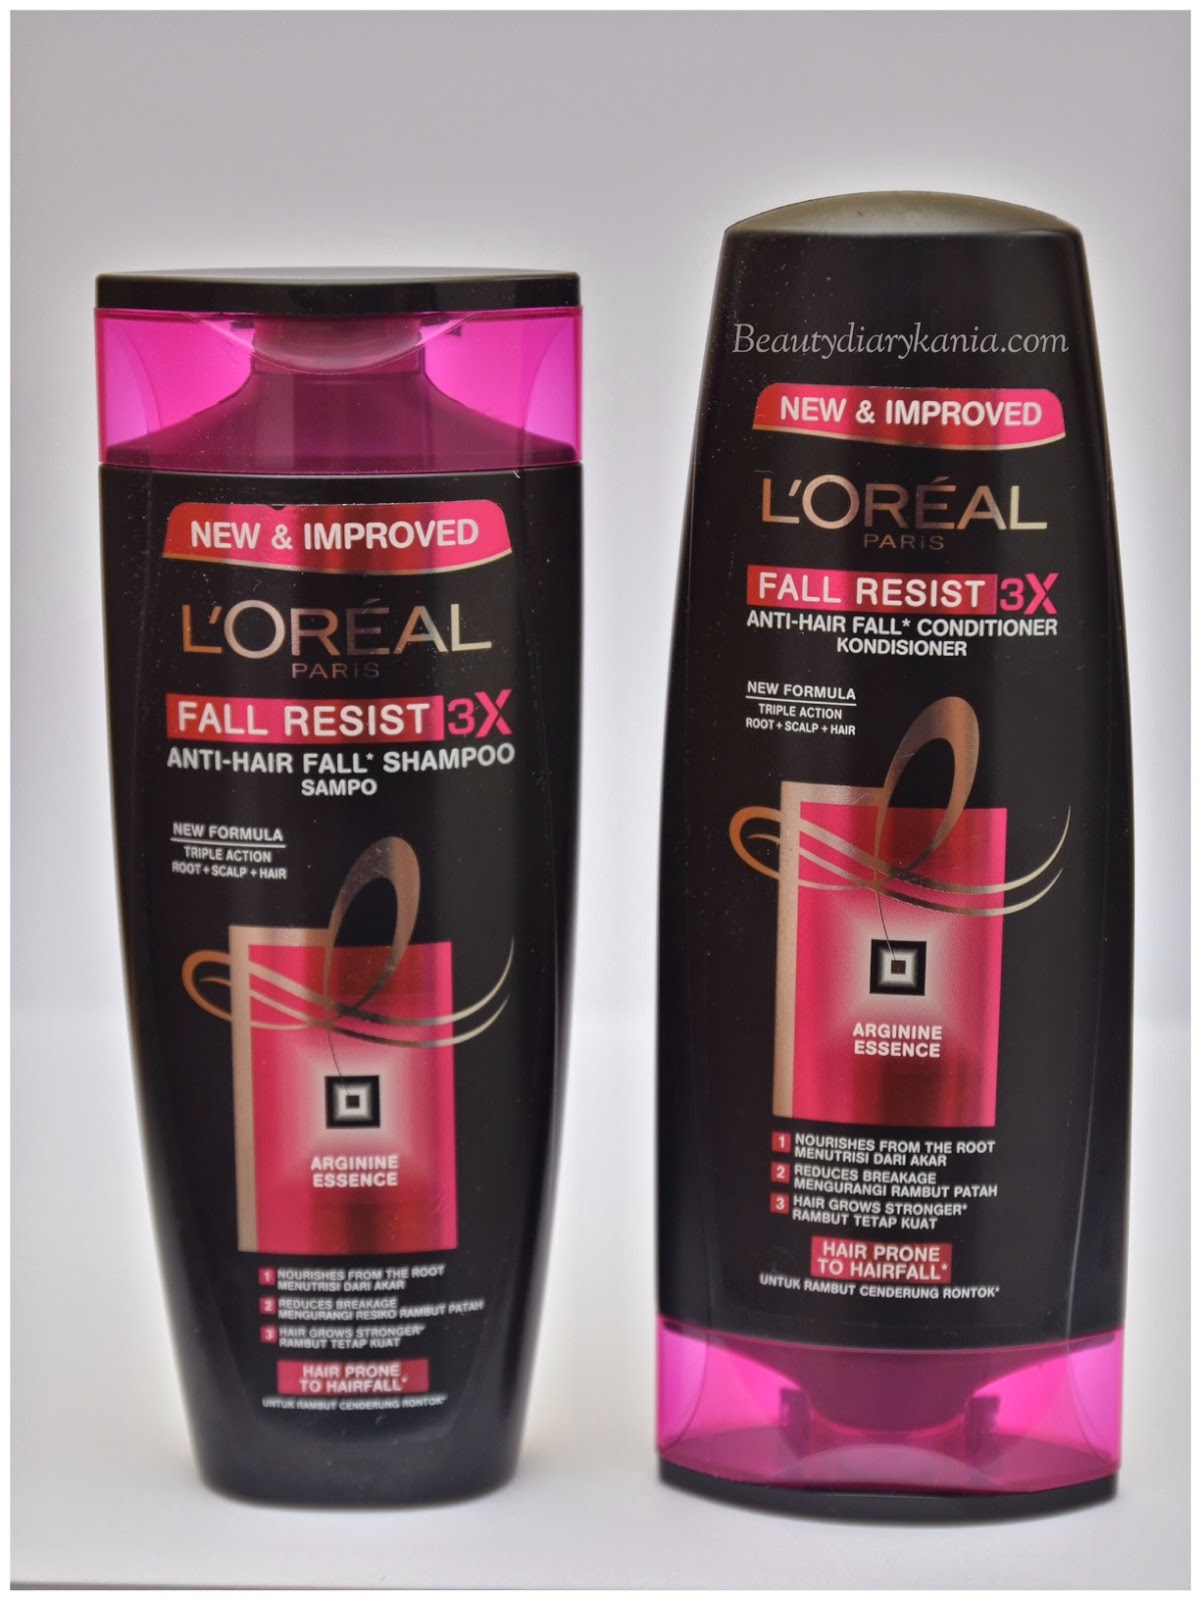 Beauty Diary Kania: Review: Loreal Paris Hair Fall Resist 3X Shampoo &  Conditioner